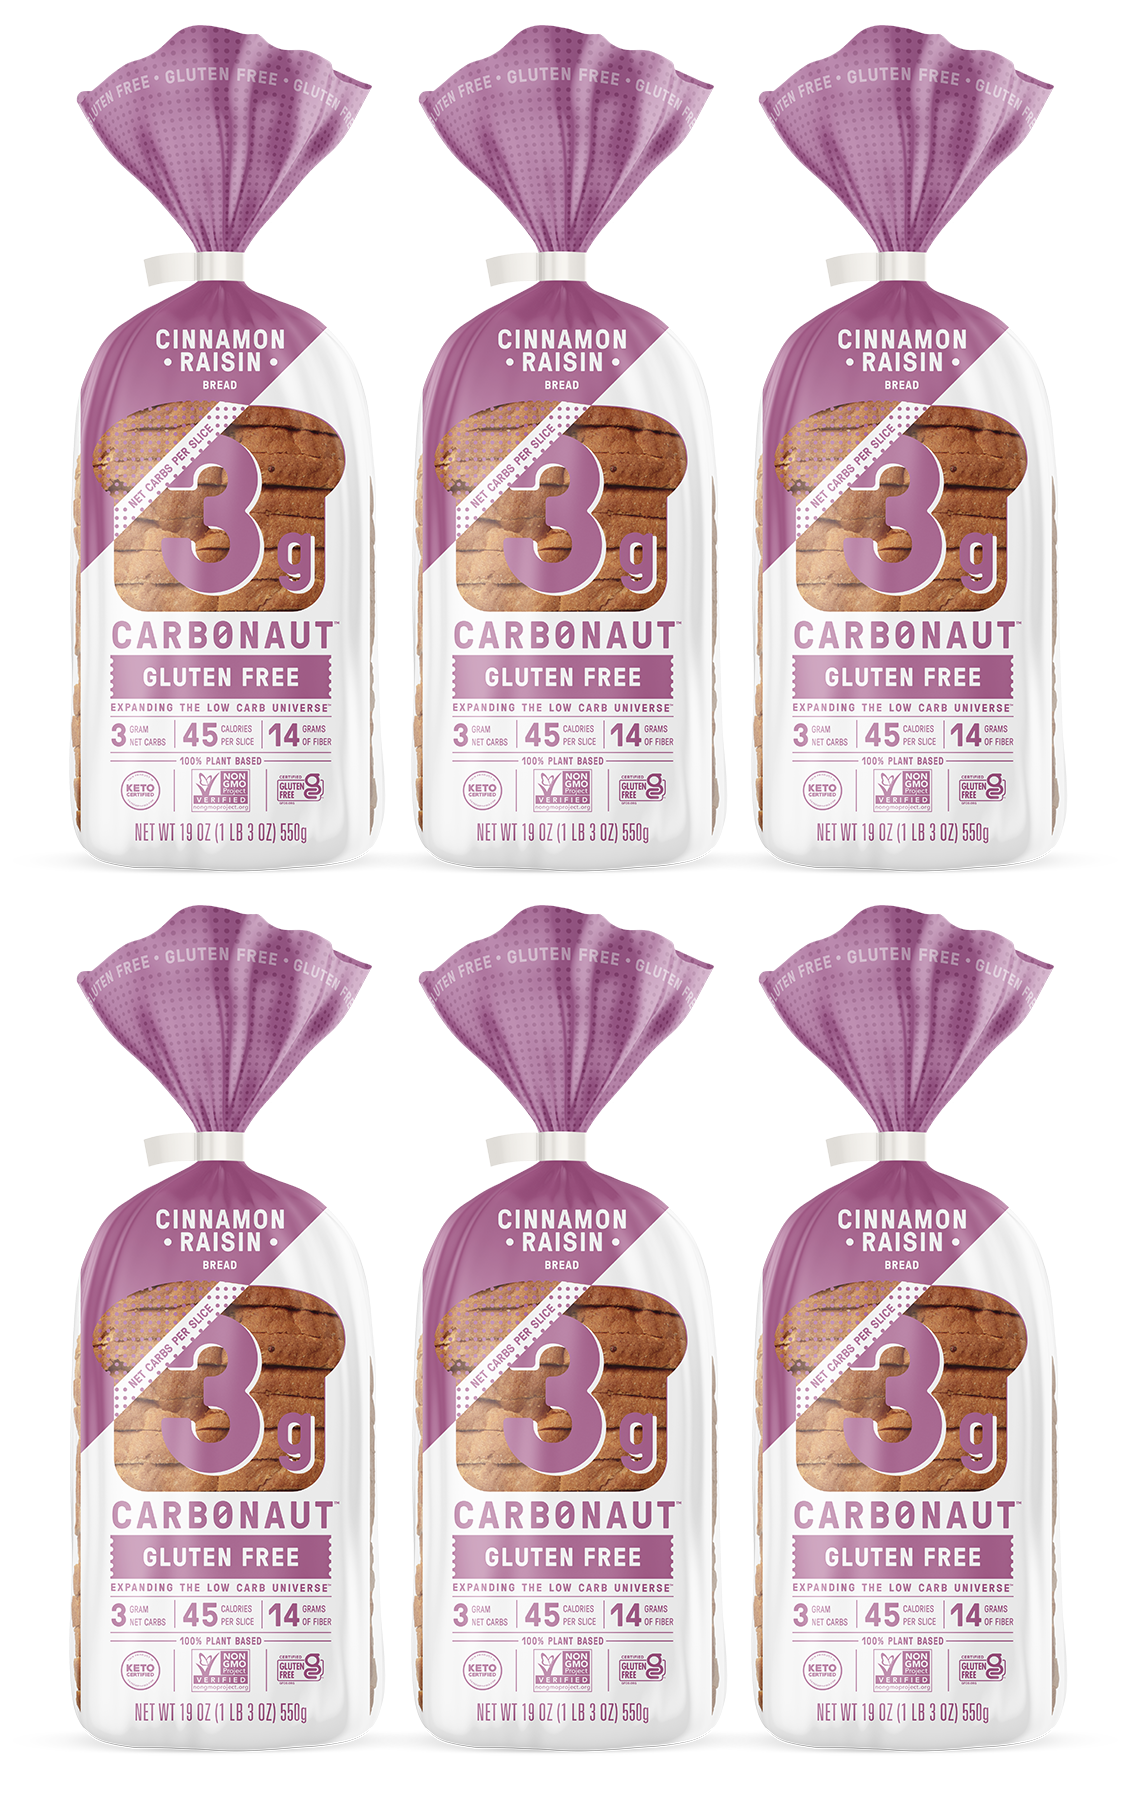 #Flavor_Cinnamon Raisin #Size_6-Pack